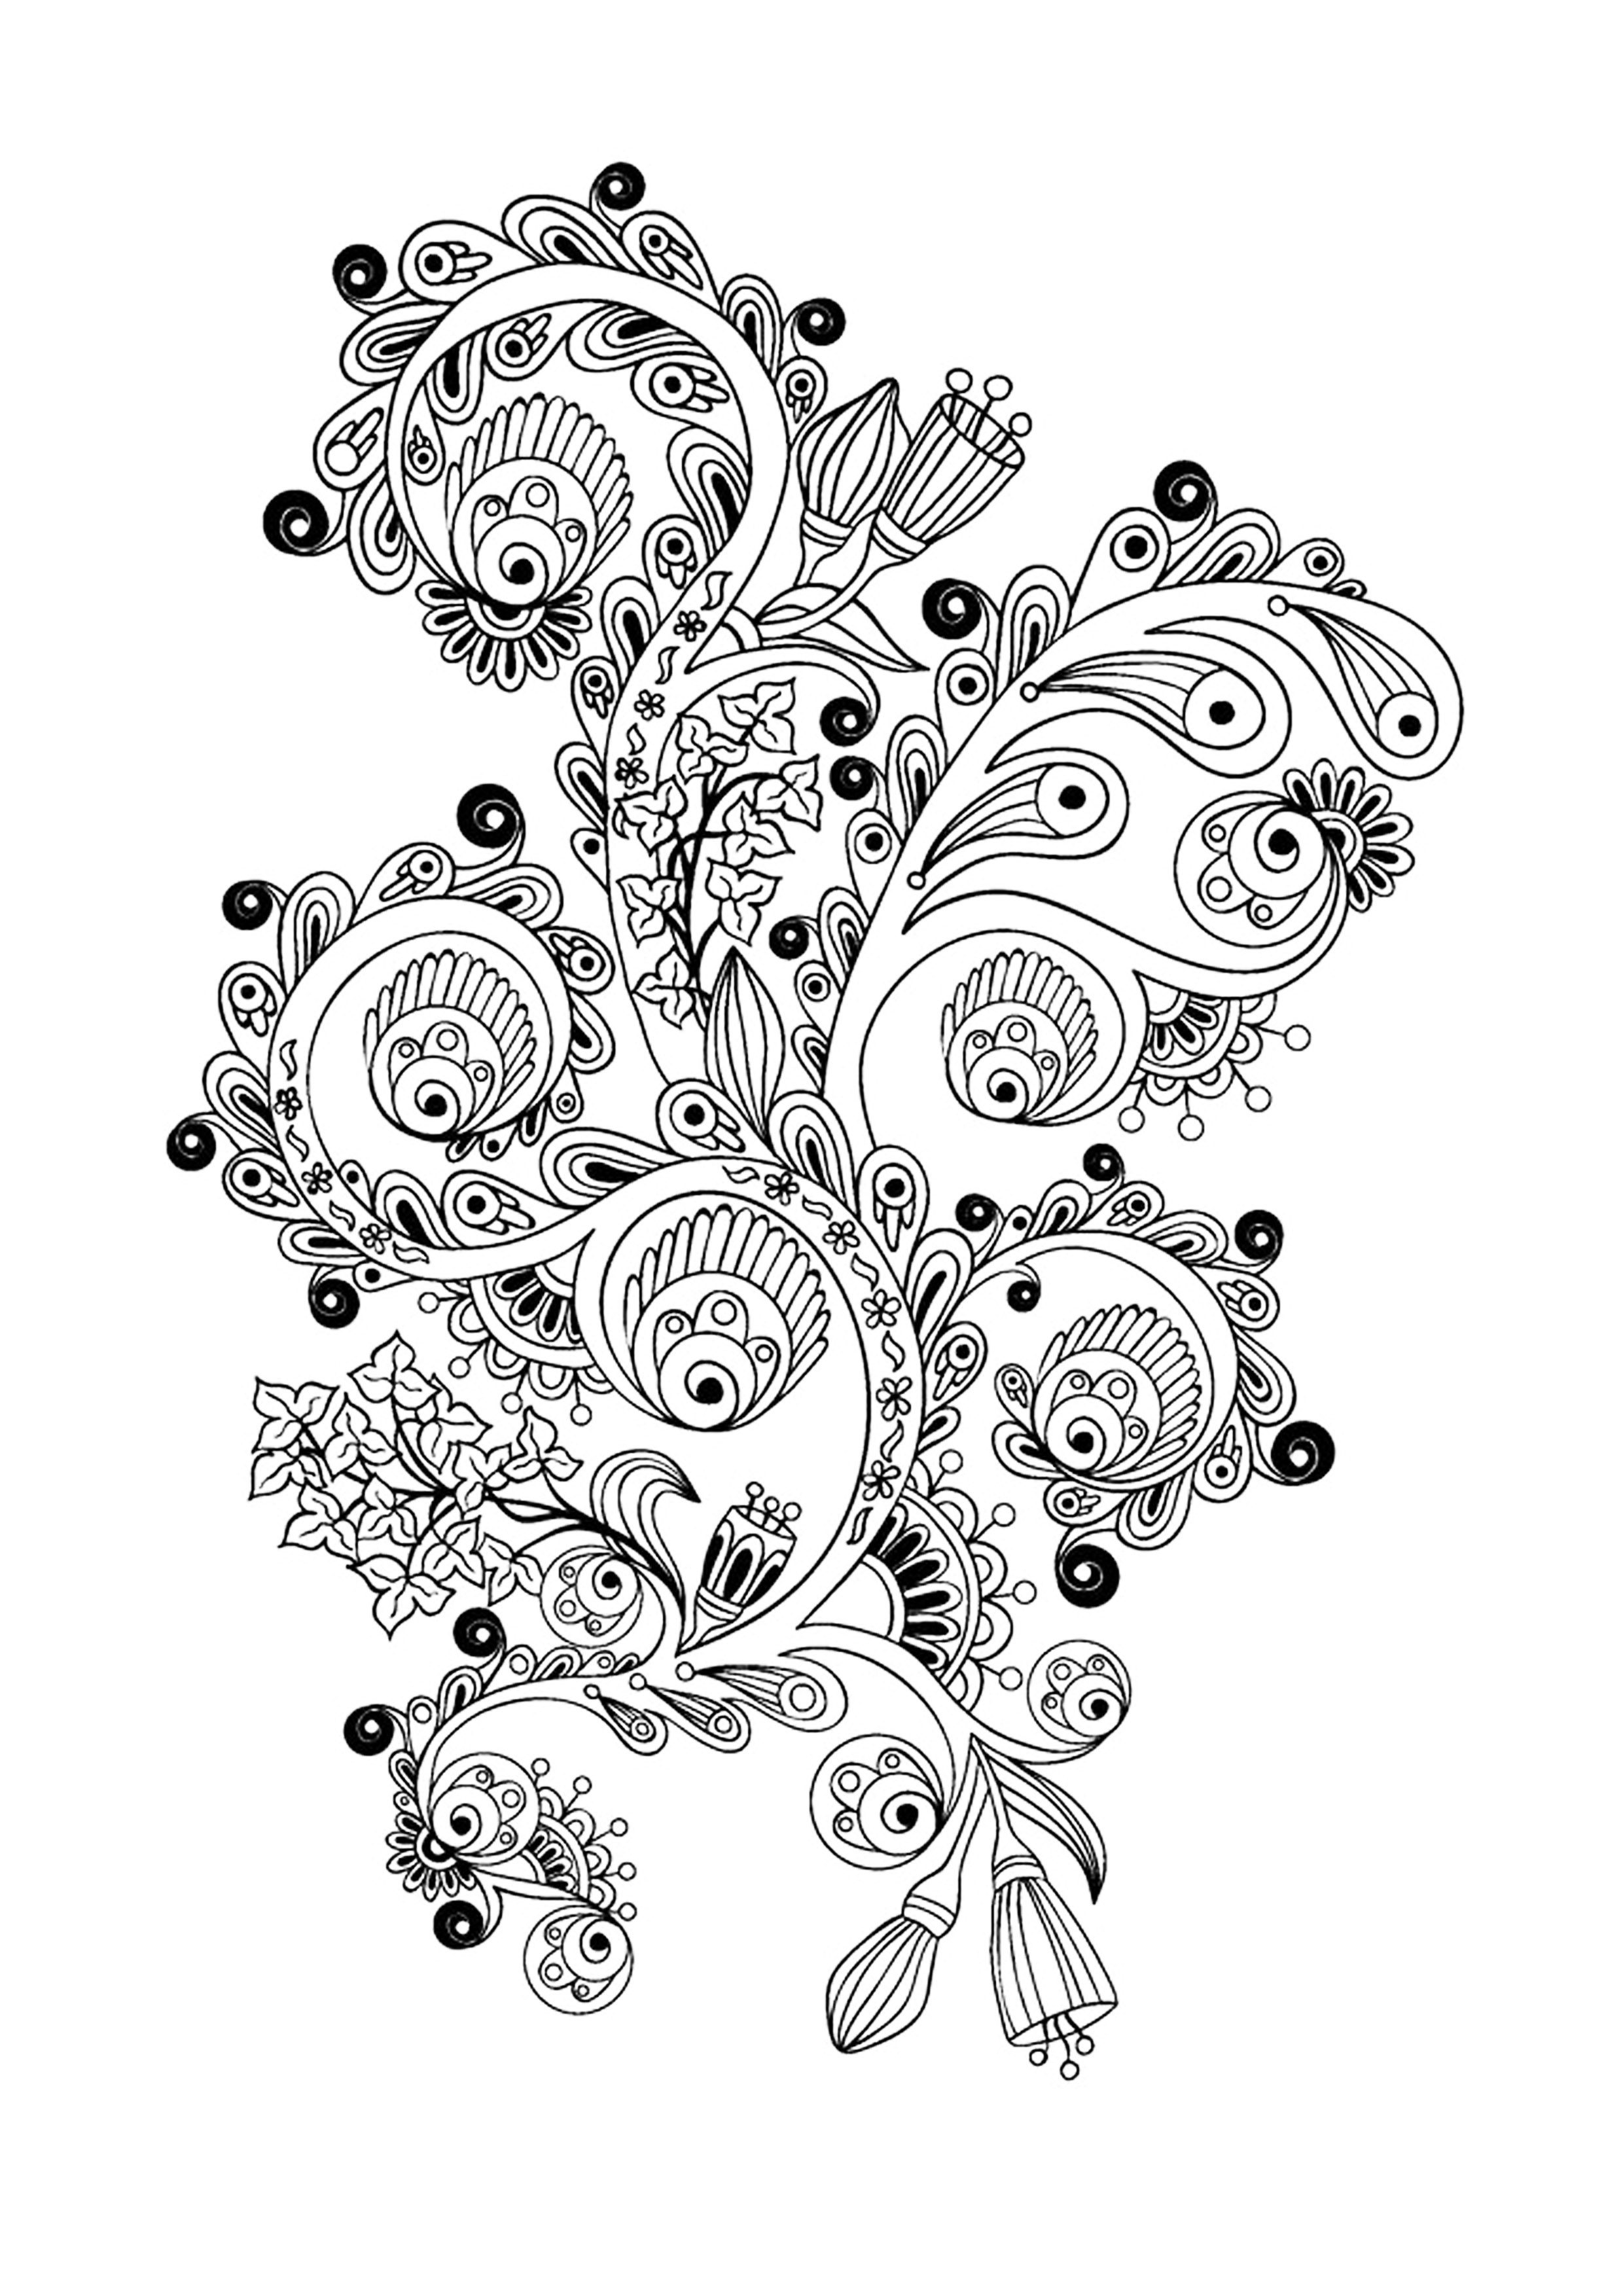 Coloriage 100% Anti-stress : motifs abstraits d'inspiration florale : n°8